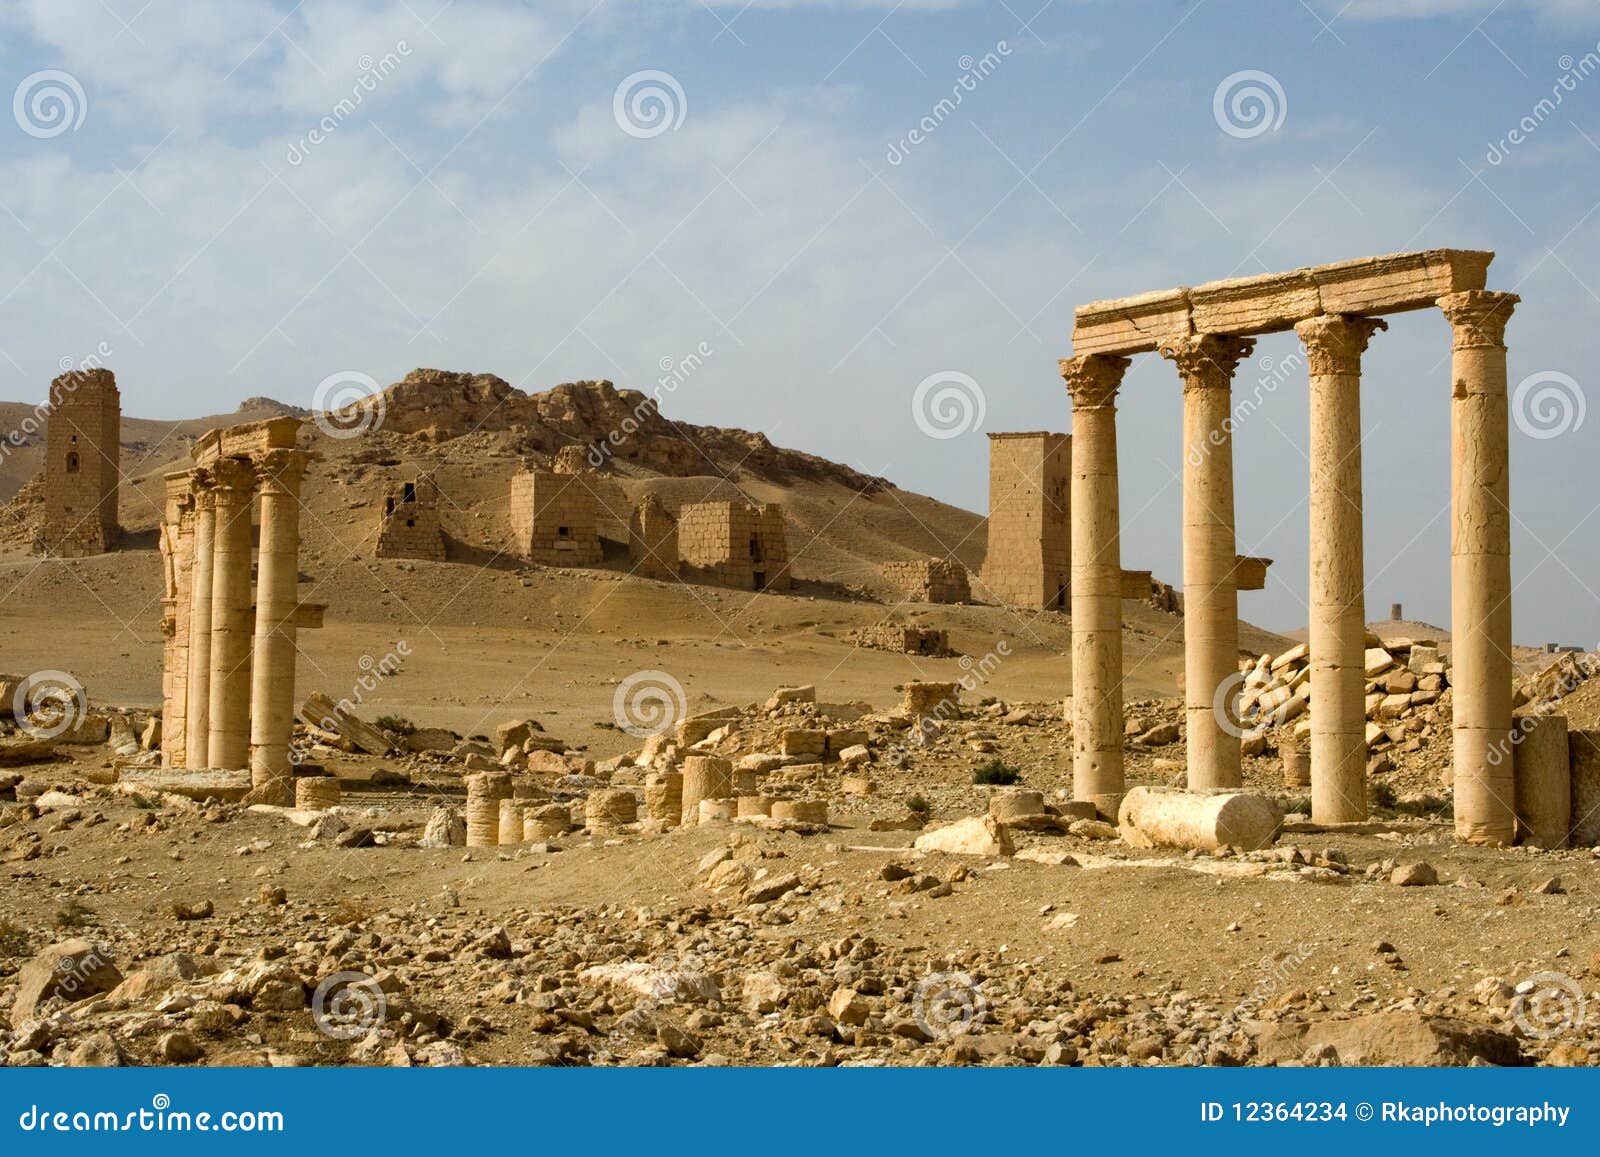 colonnades and necropolis, palmyra